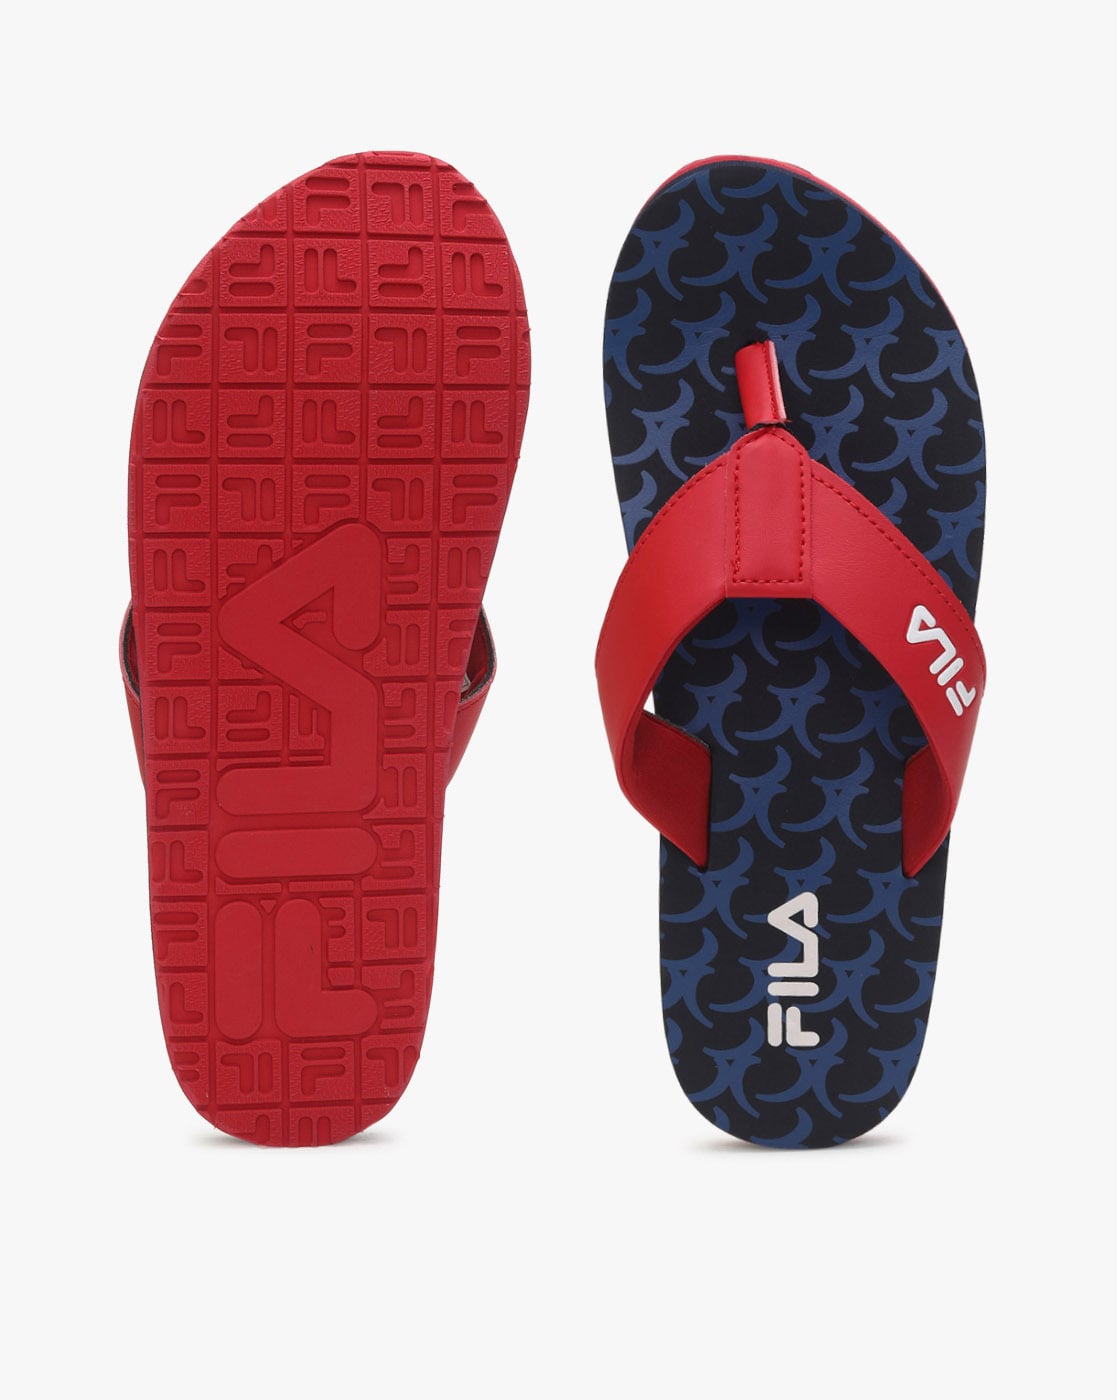 Buy Sandals for Men by Online | Ajio.com